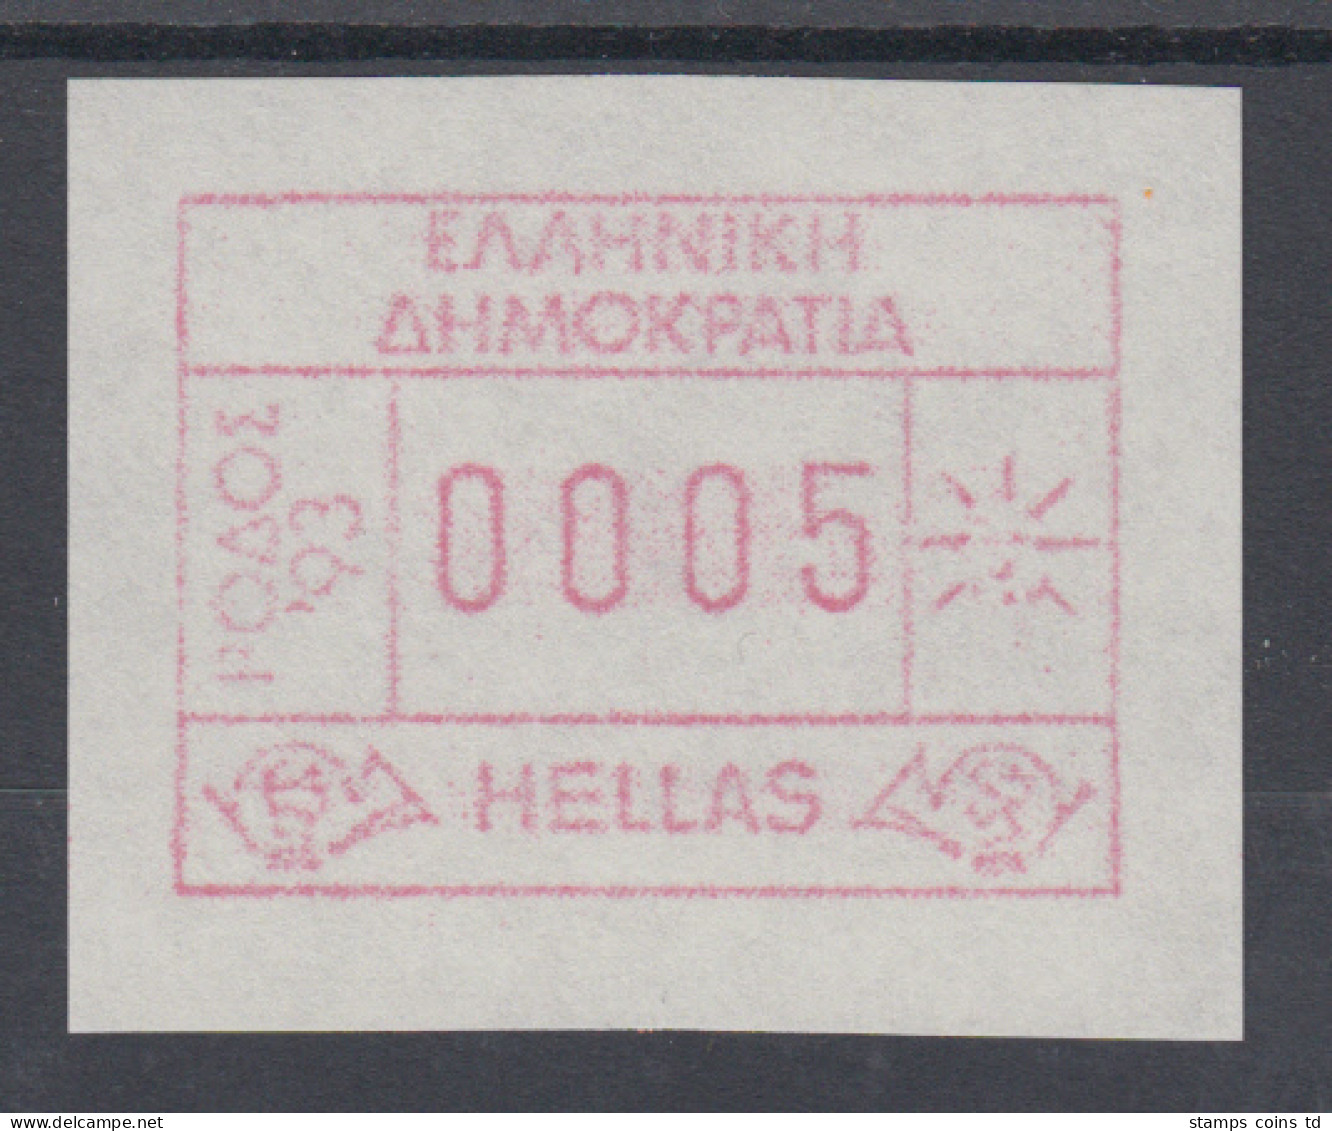 Griechenland: Frama-ATM Sonderausgabe RHODOS `93 W-Papier, Mi.-Nr.13 W ** - Timbres De Distributeurs [ATM]